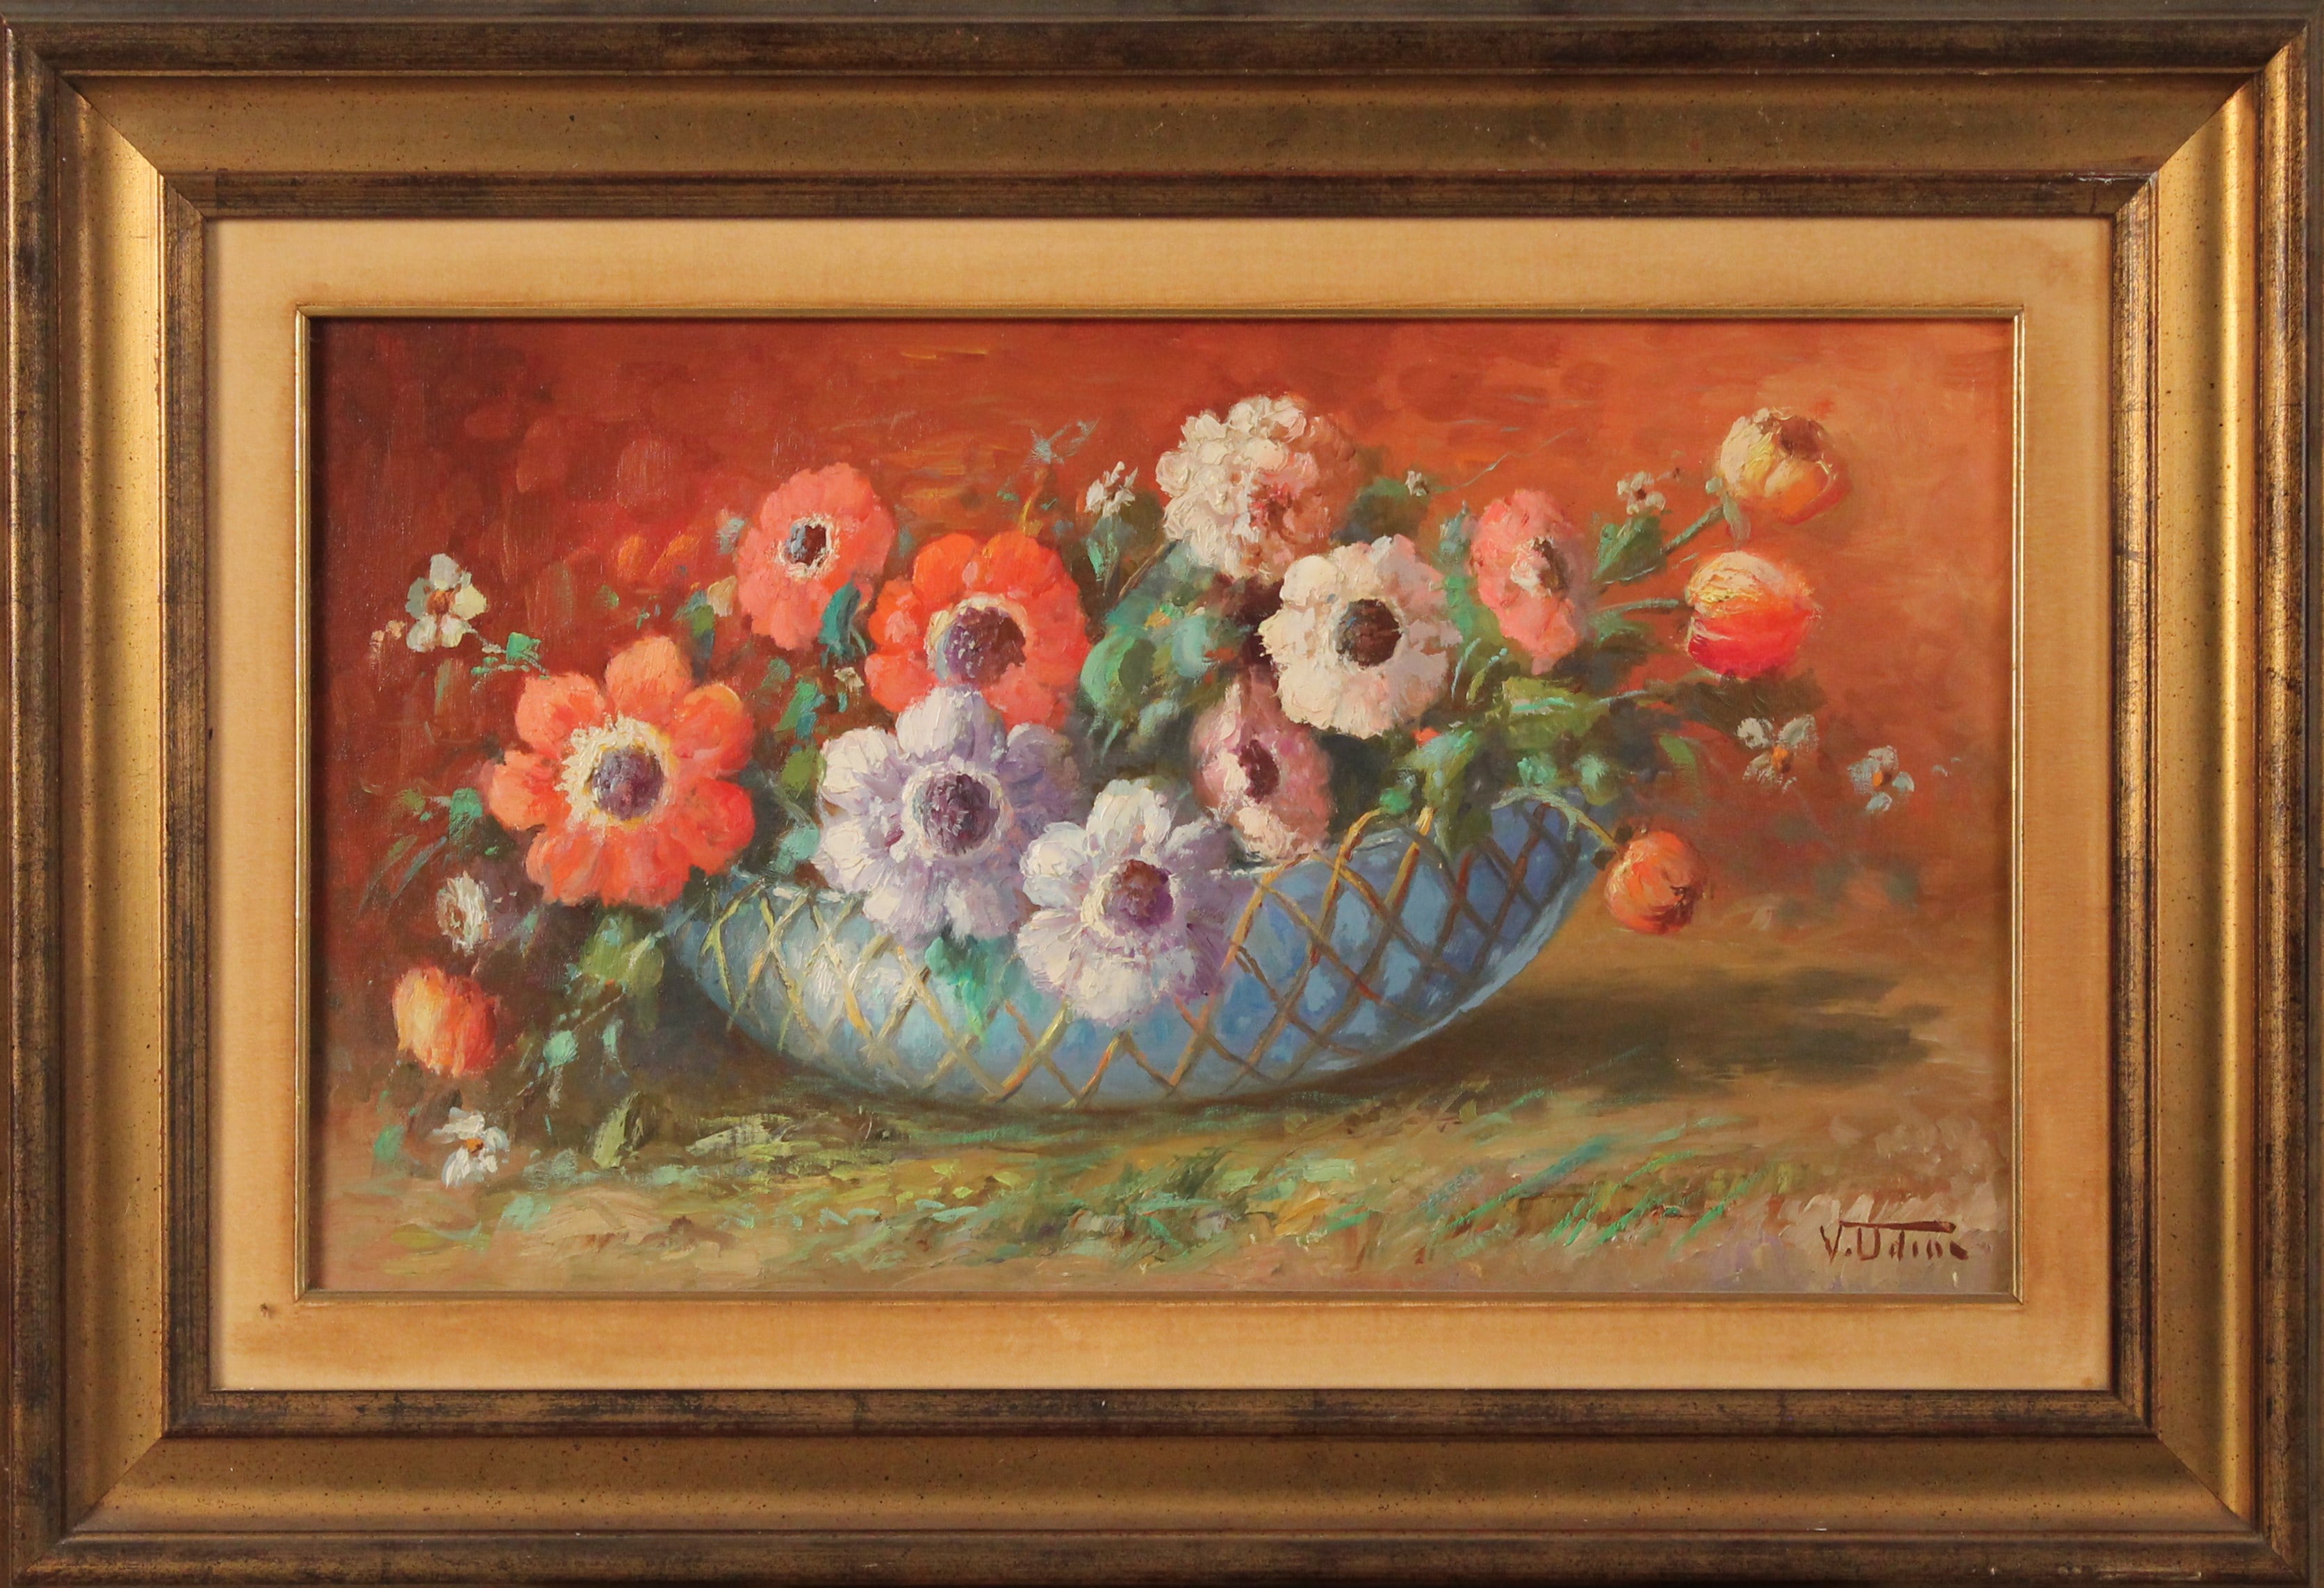 Vincenzo Udine (1898/1981) "Cesto di fiori" - "Basket of Flowers"